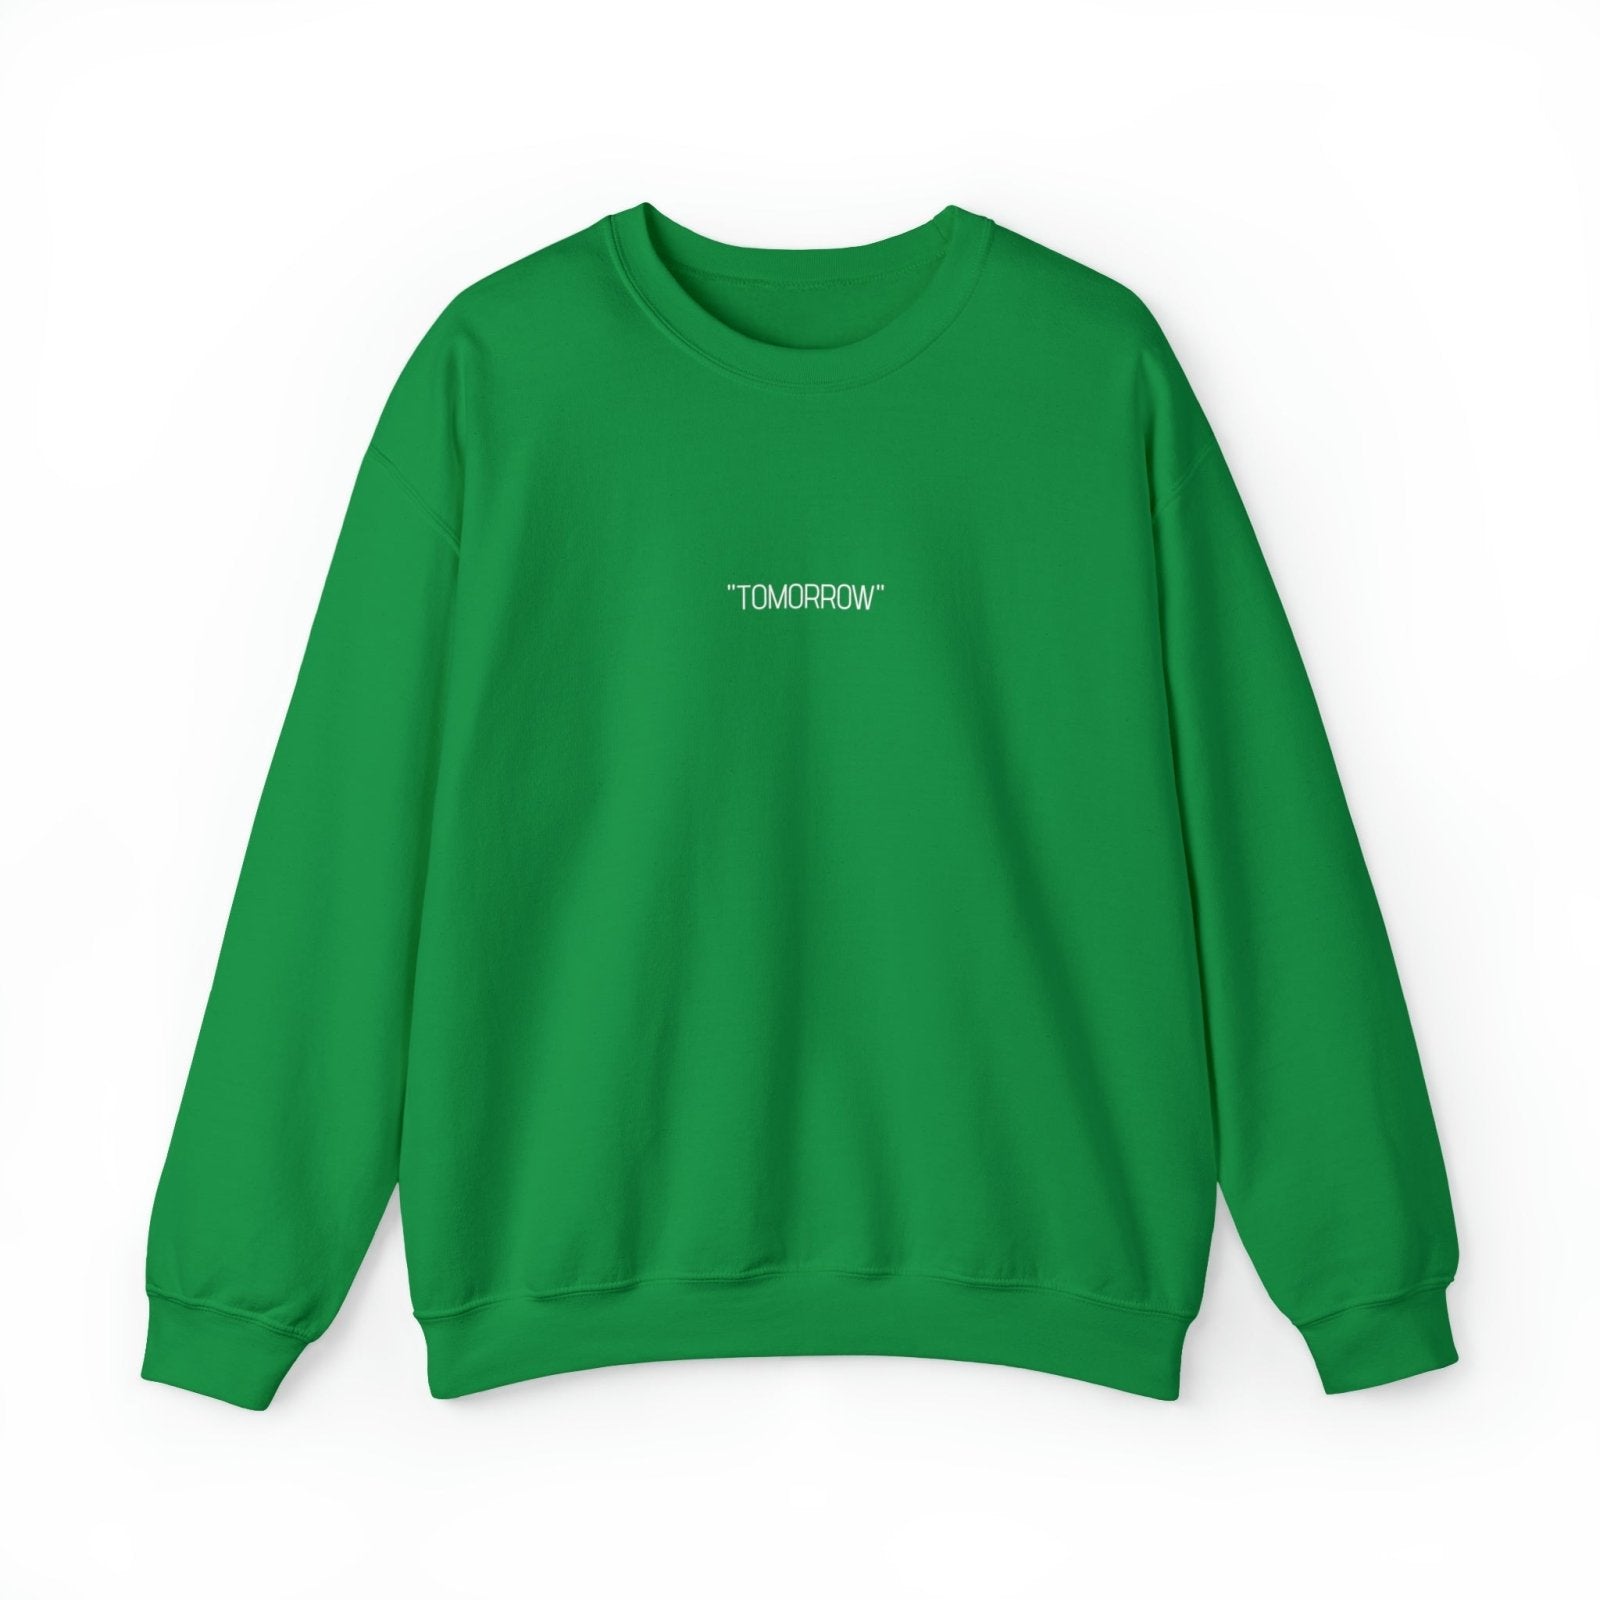 "TOMORROW" Motivational cotton sweatshirt